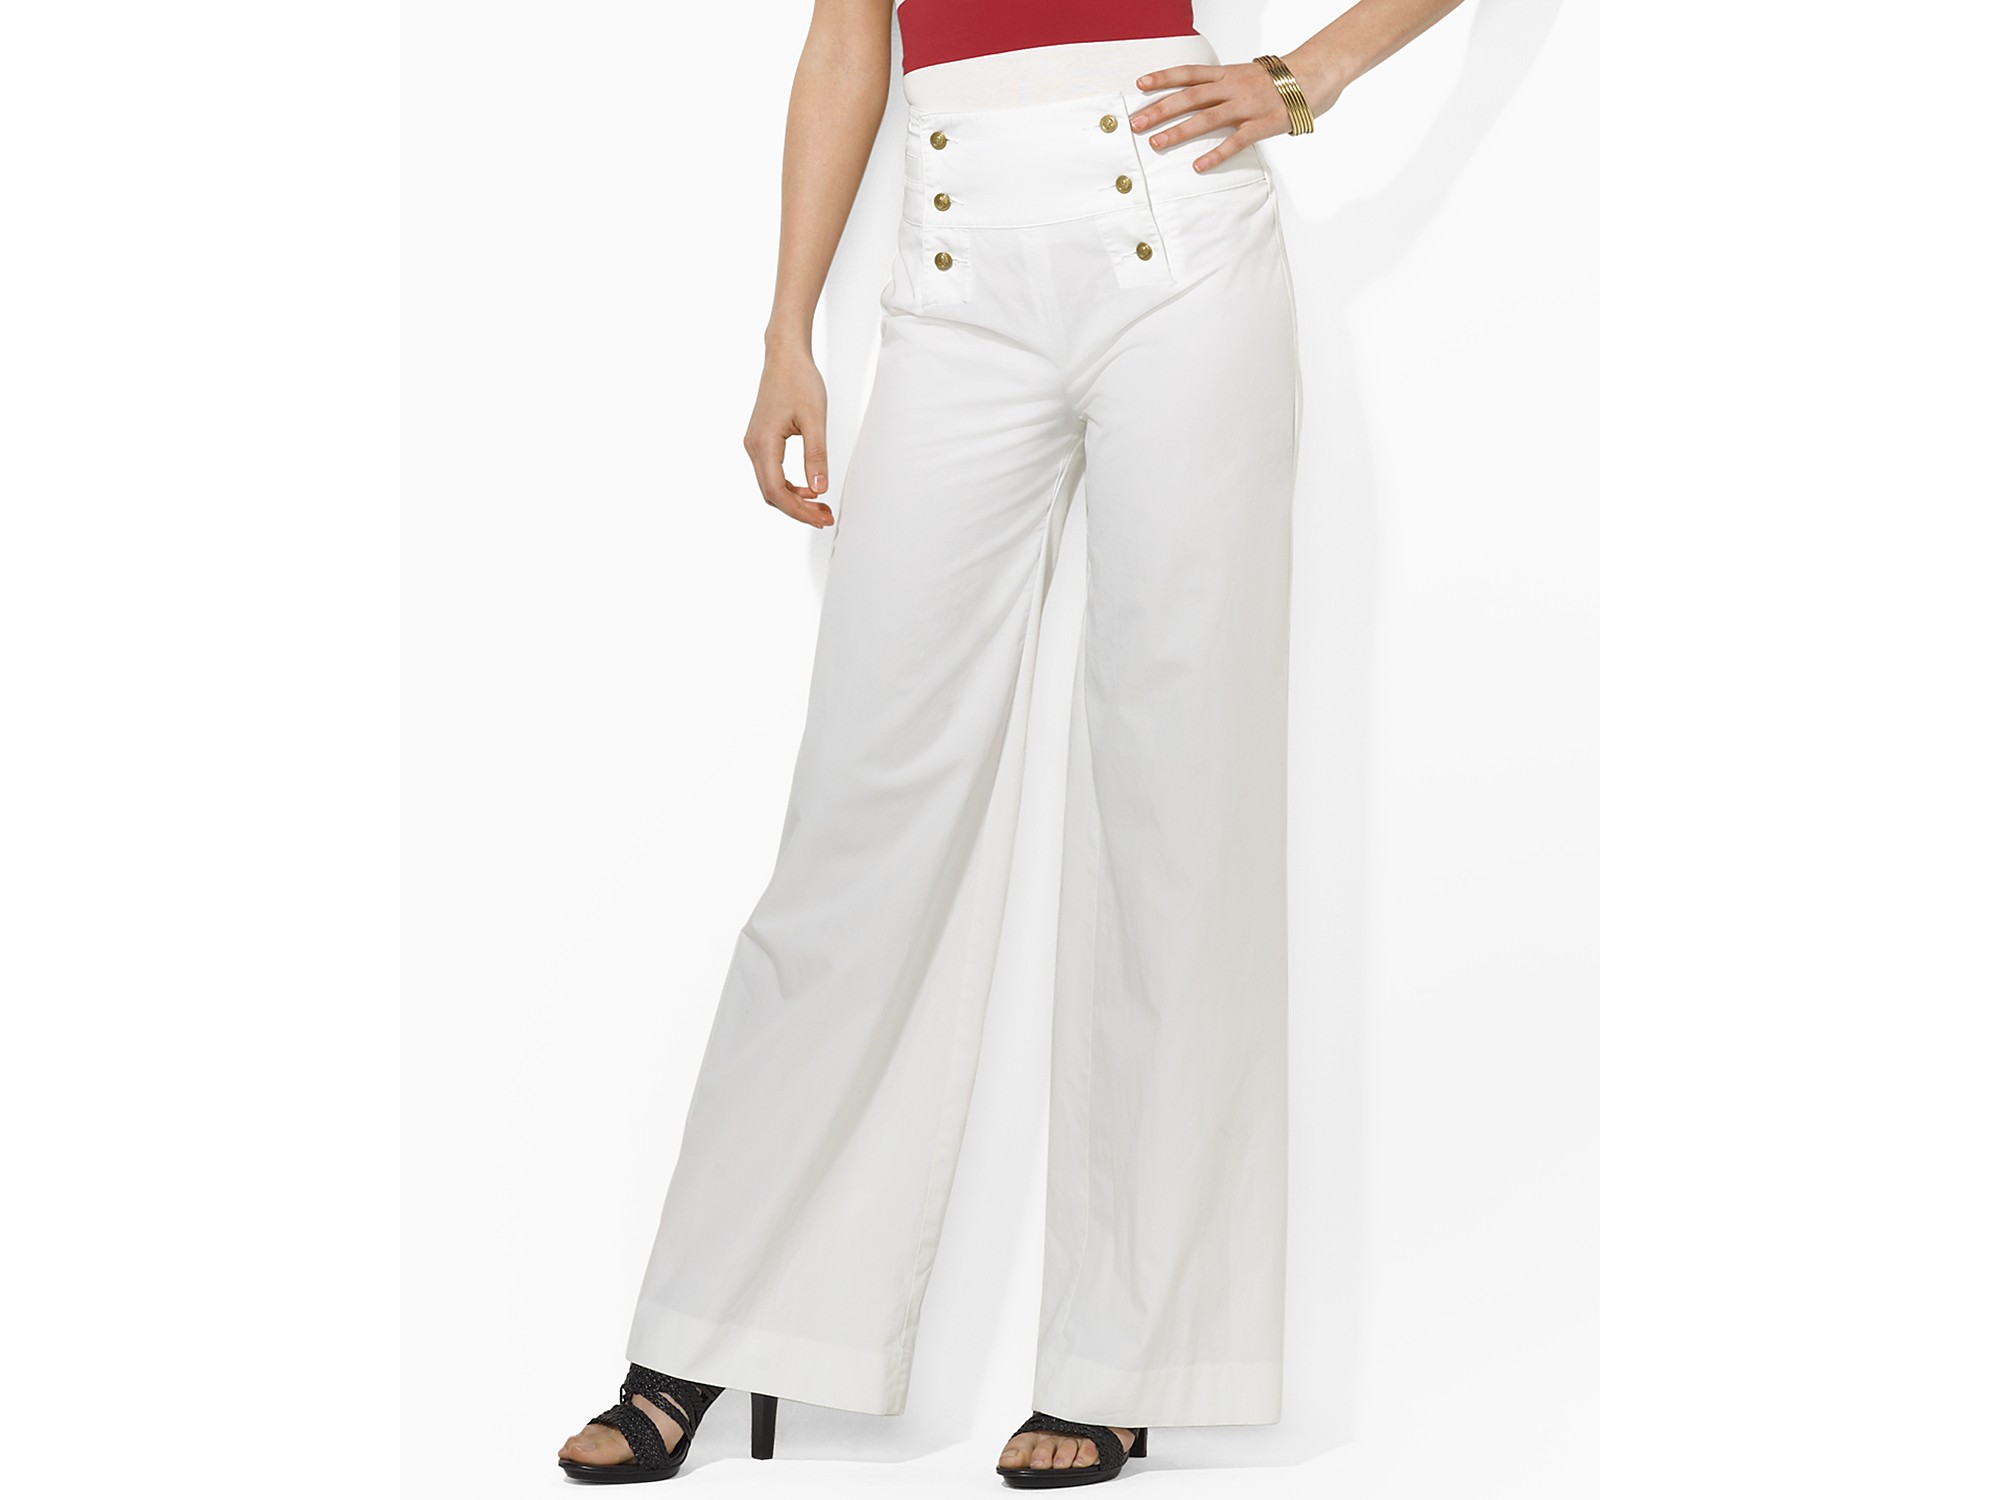 Lauren by Ralph Lauren Nicklaus Cotton Twill Sailor Pants in White - Lyst